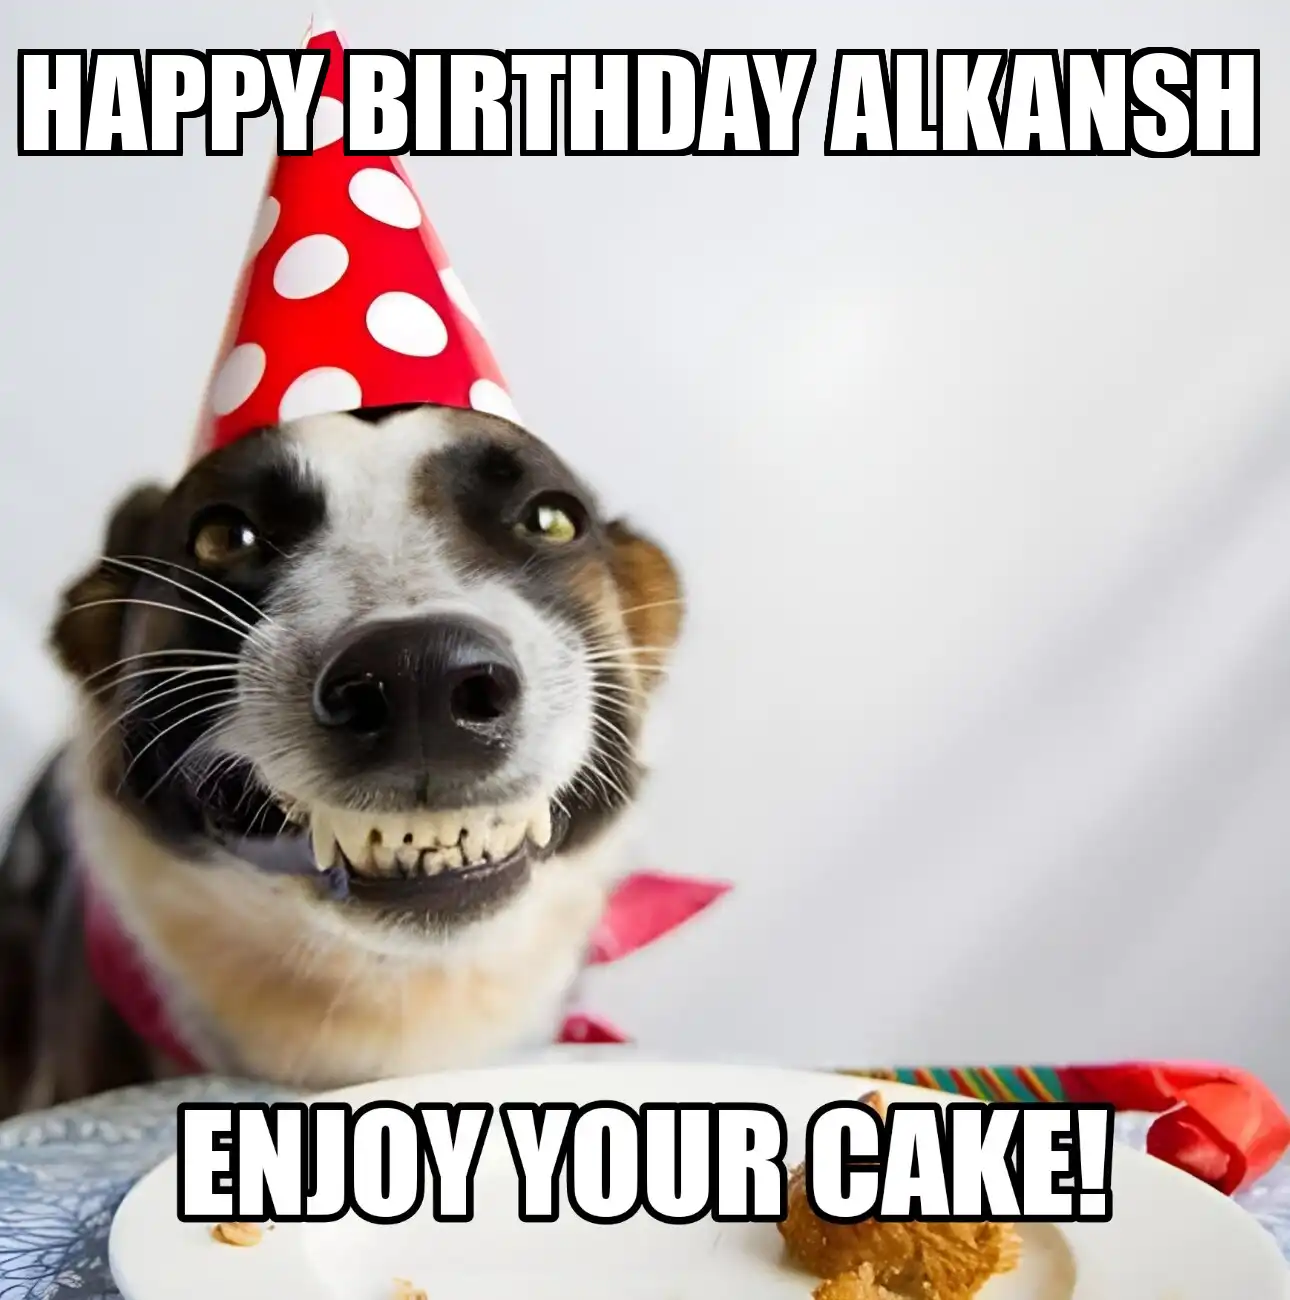 Happy Birthday Alkansh Enjoy Your Cake Dog Meme